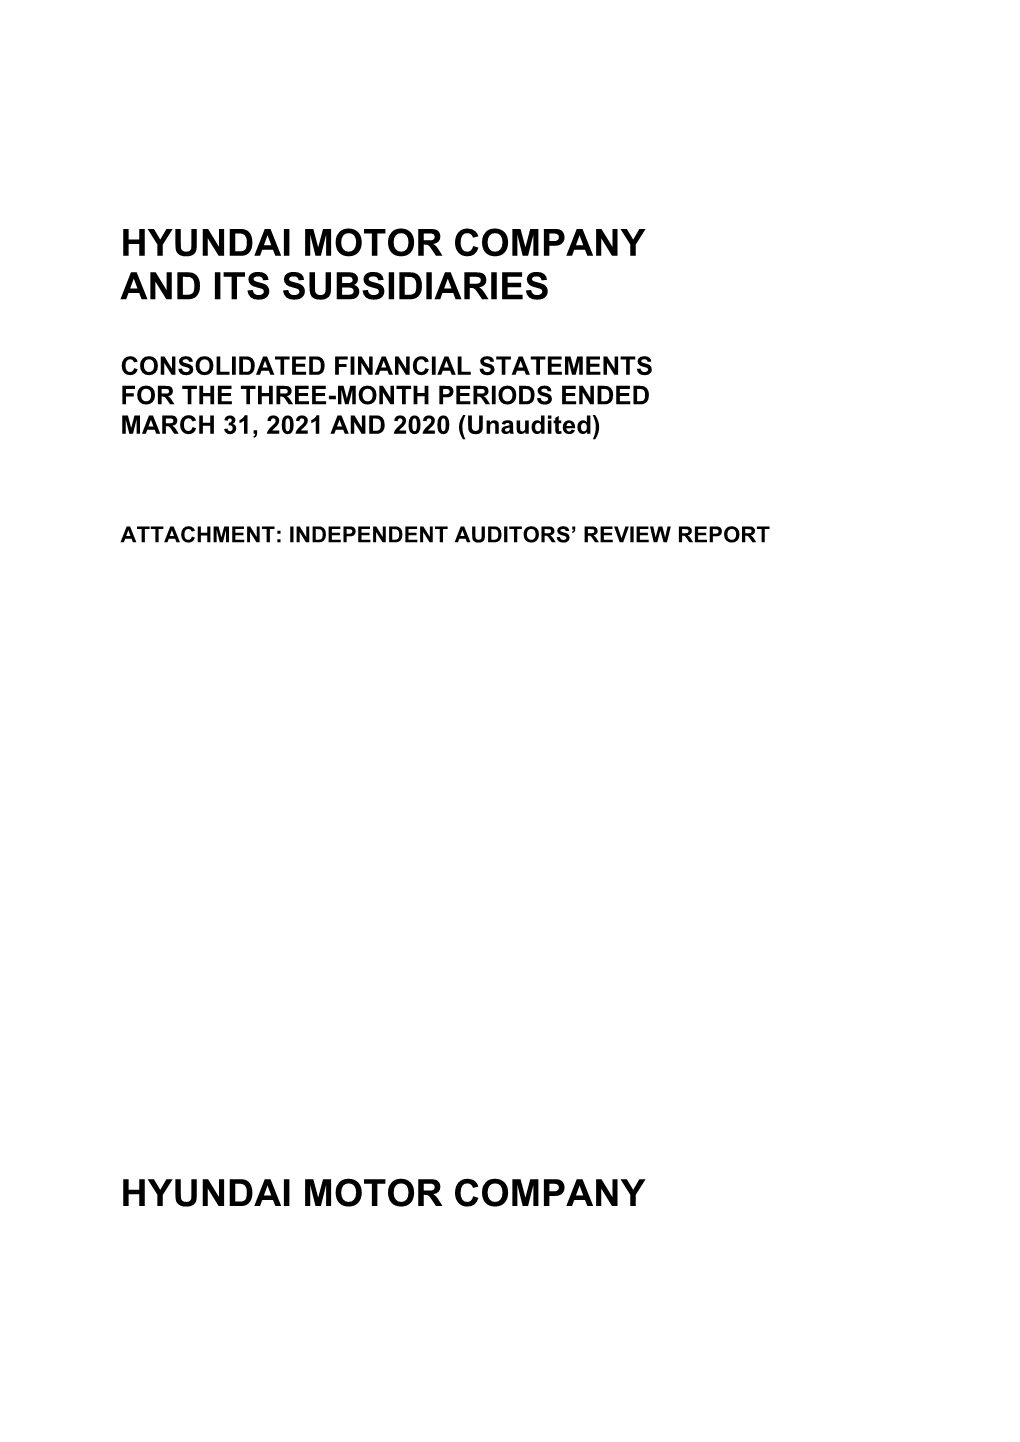 Hyundai Motor Company and Its Subsidiaries Consolidated Financial